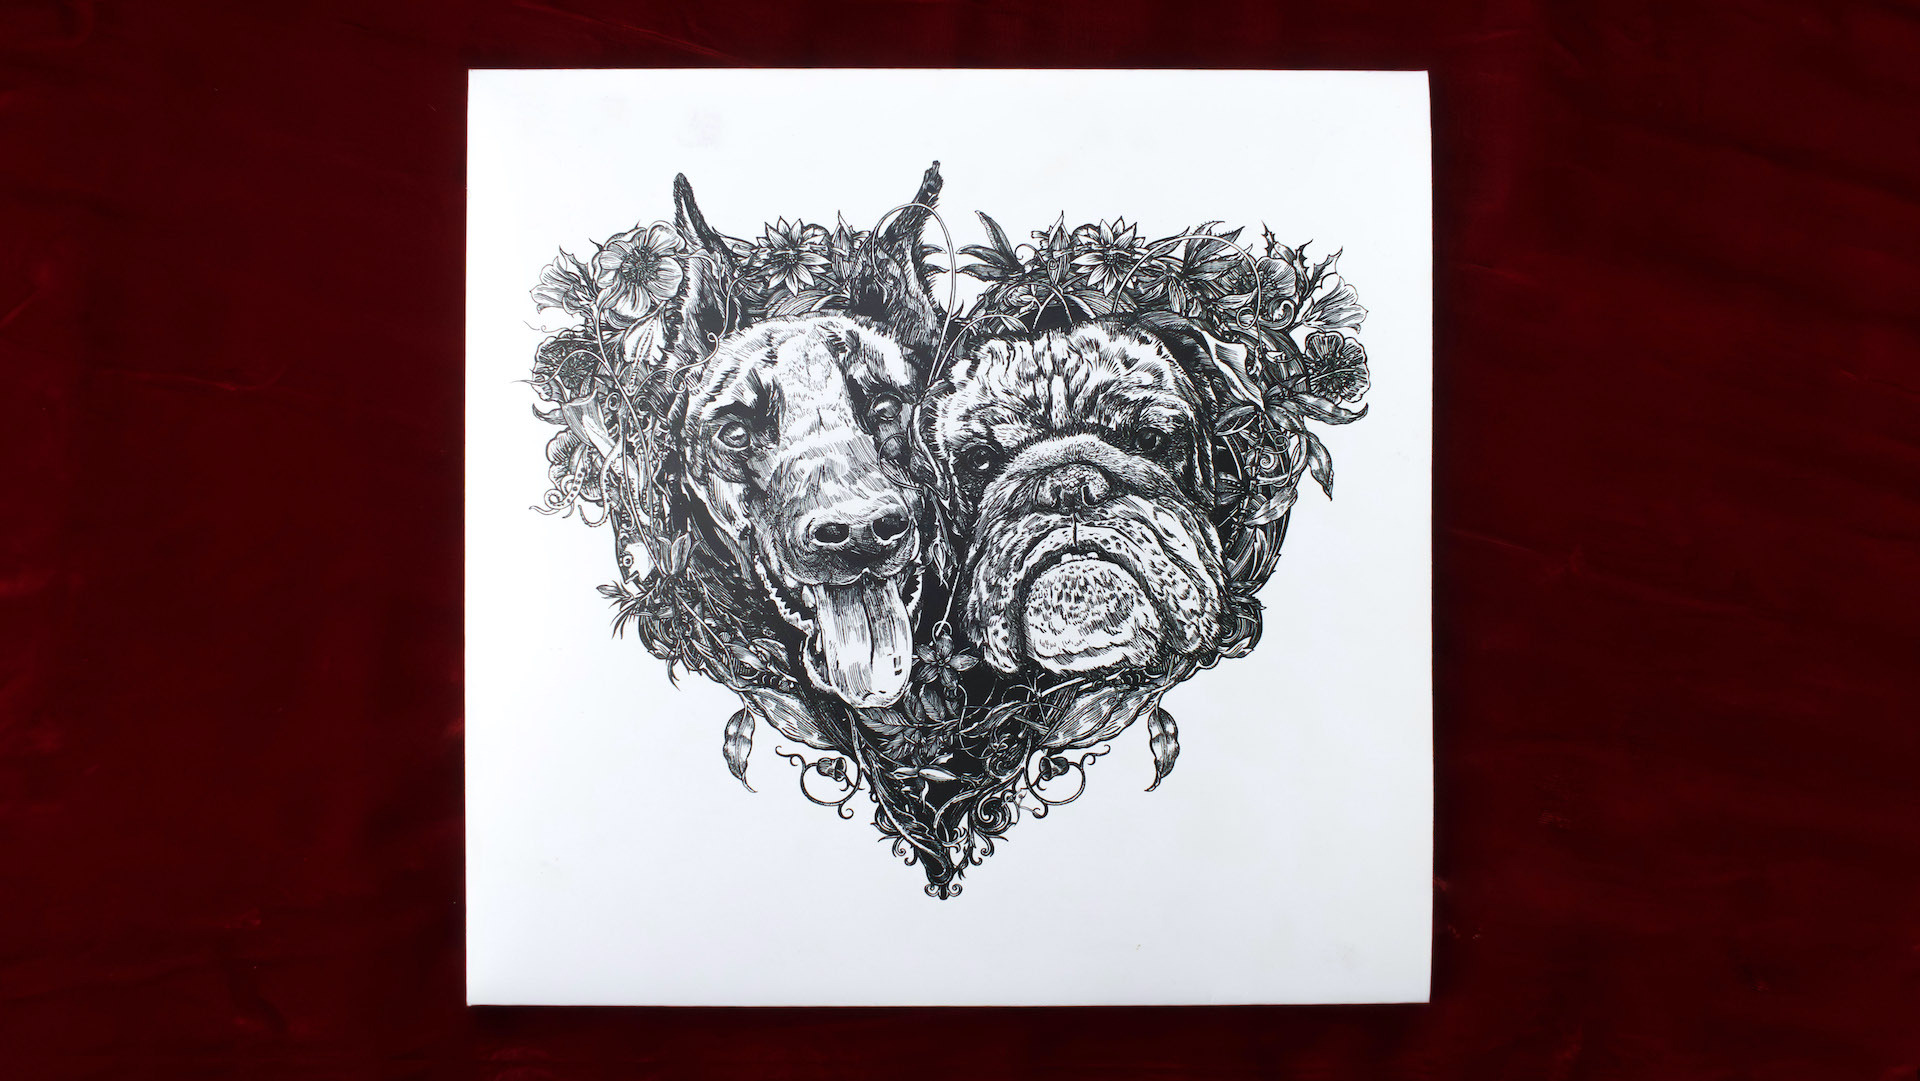 kate-bush-hounds-of-love-vinyl-resissue-baskerville-edition